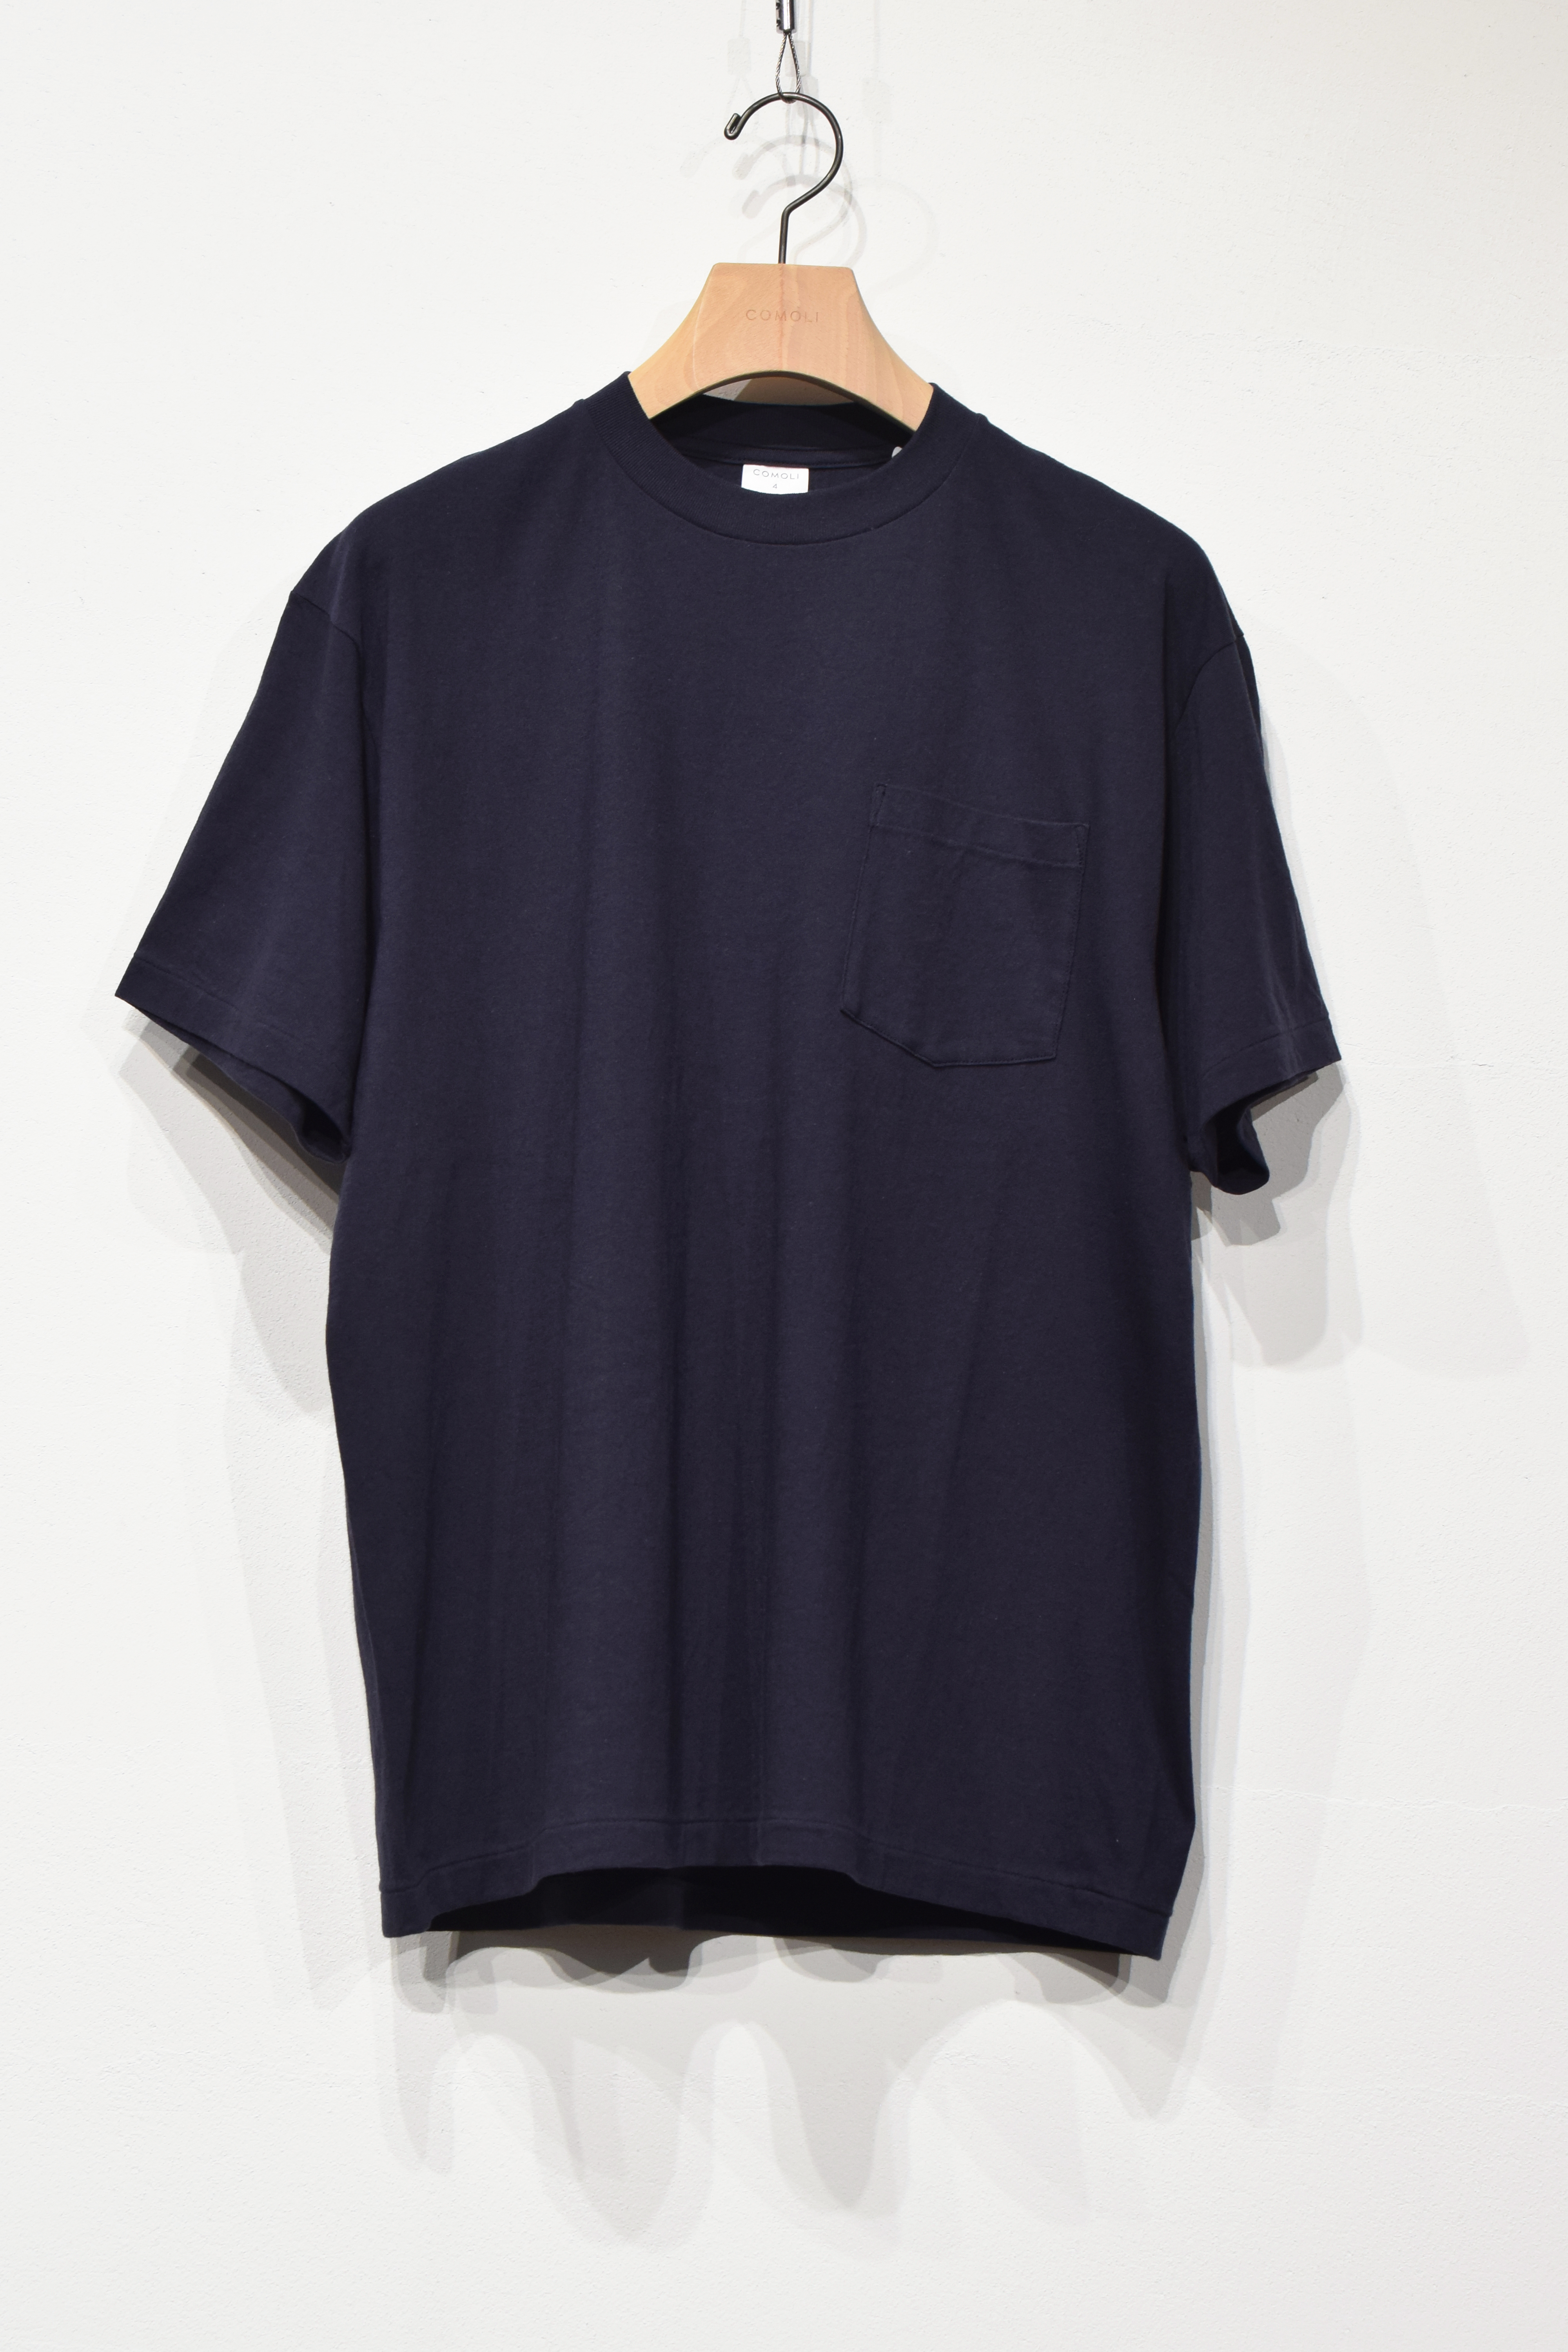 COMOLI (コモリ) / SURPLUS Tシャツ #X01-05015(2)